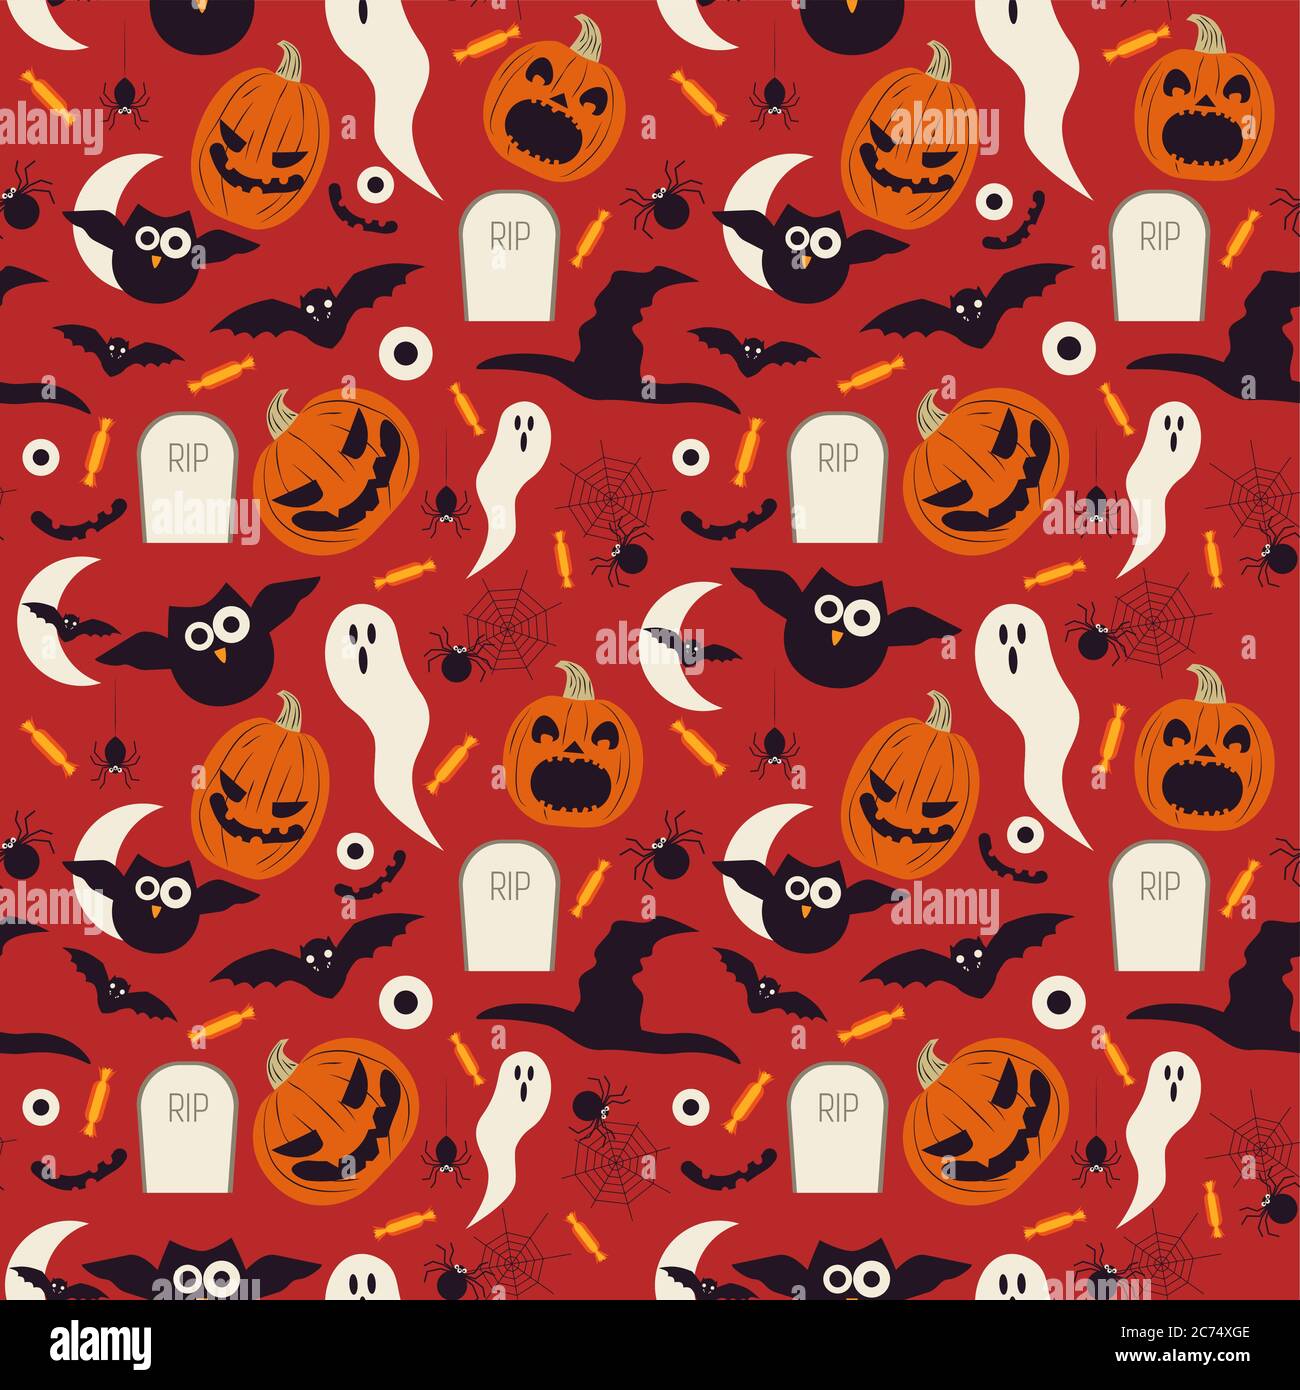 Vector illustration of Halloween seamless pattern with owls, pumpkins, gravestones, treats, and bats Stock Vector